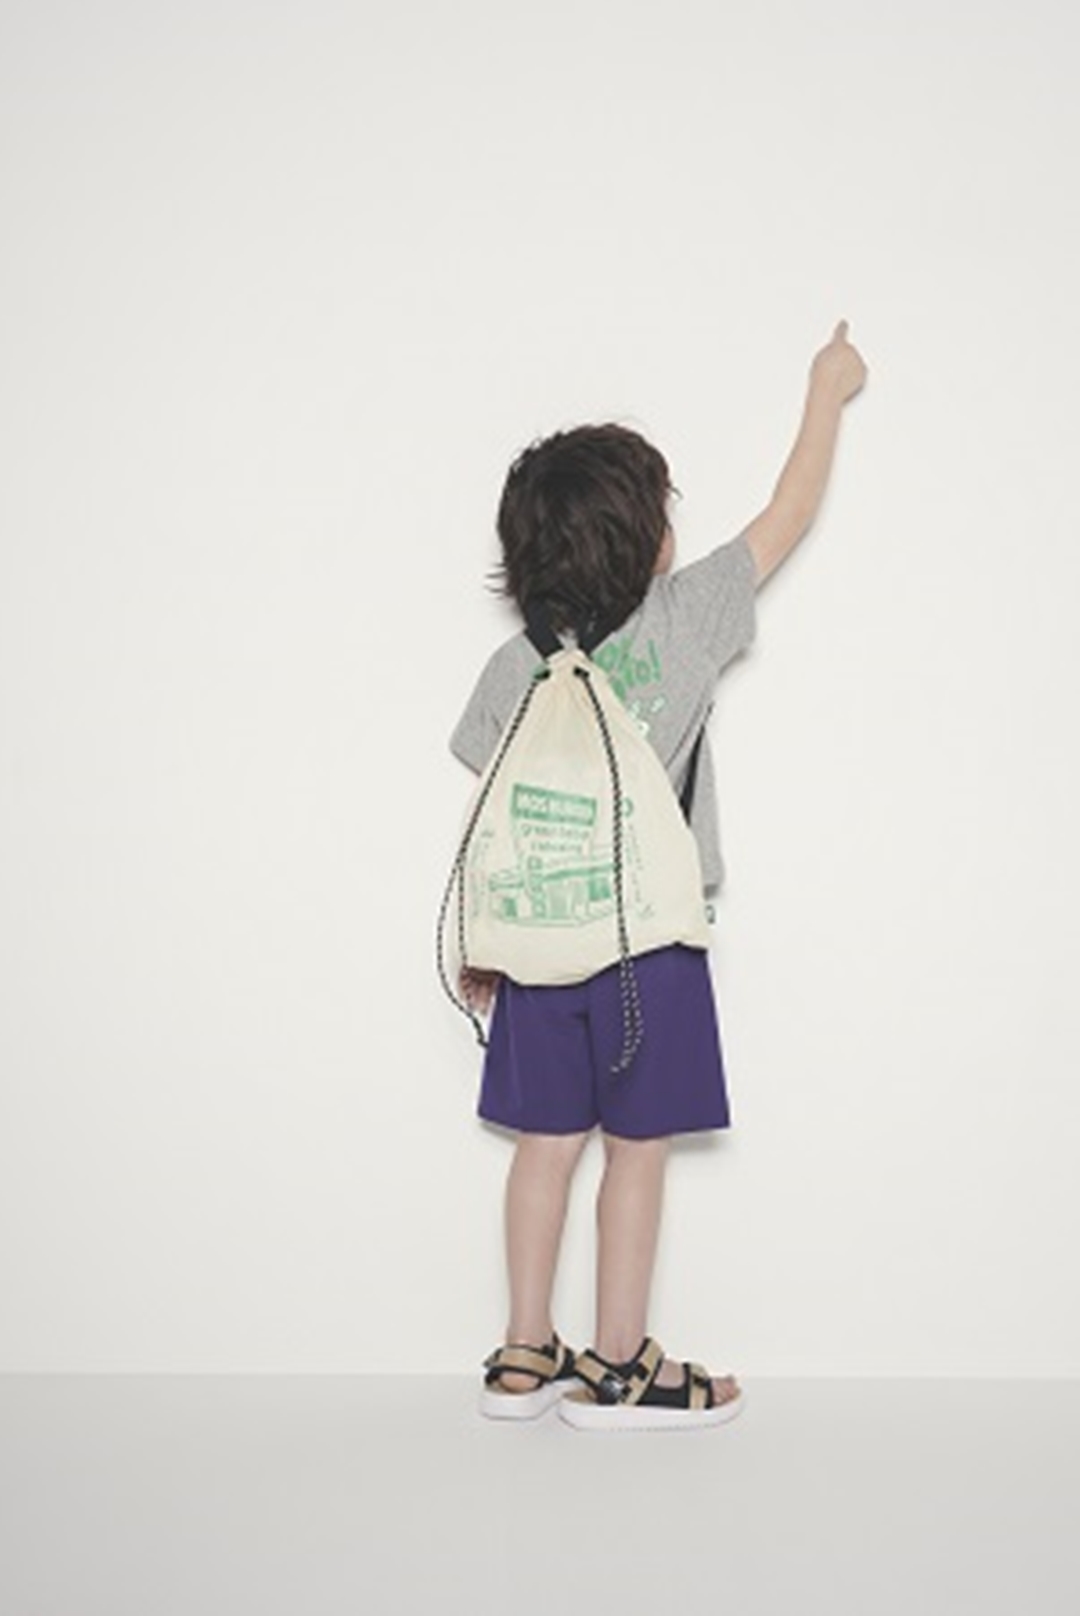 MOS BURGER × green label relaxing kids スペシャルコラボが発売 (モスバーガー グリーンレーベル リラクシング)